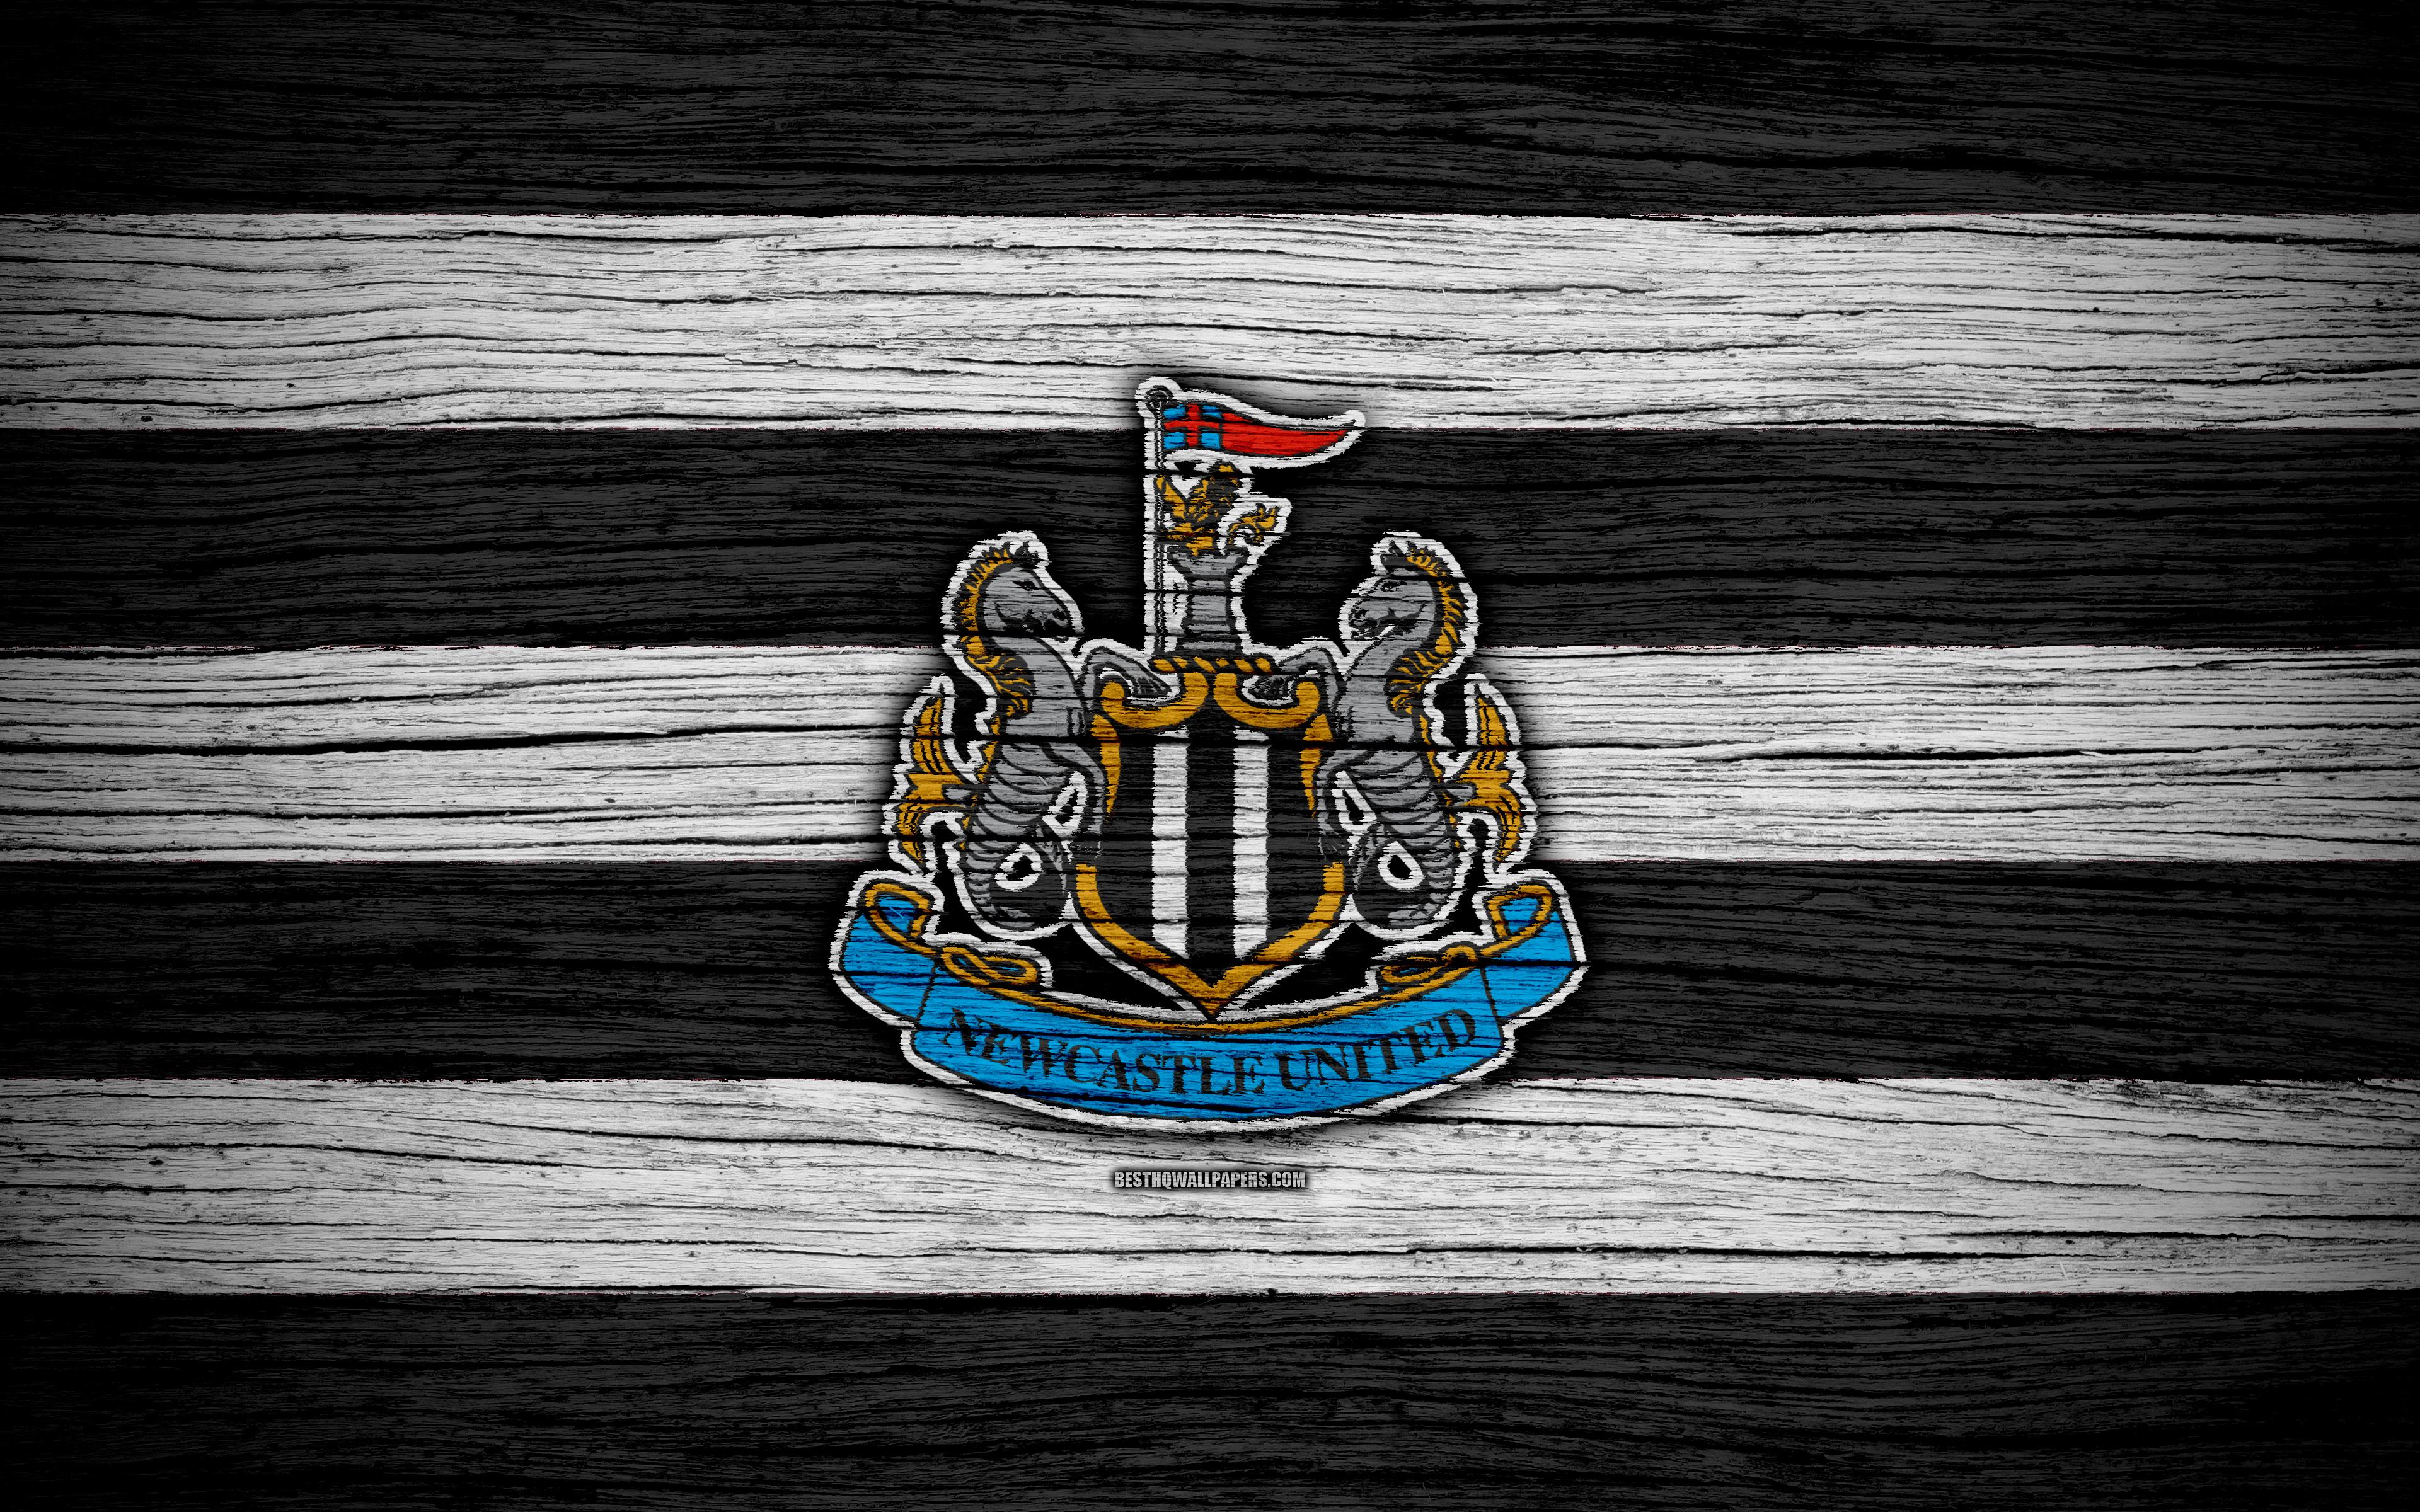 Free download Download wallpaper Newcastle United 4k Premier